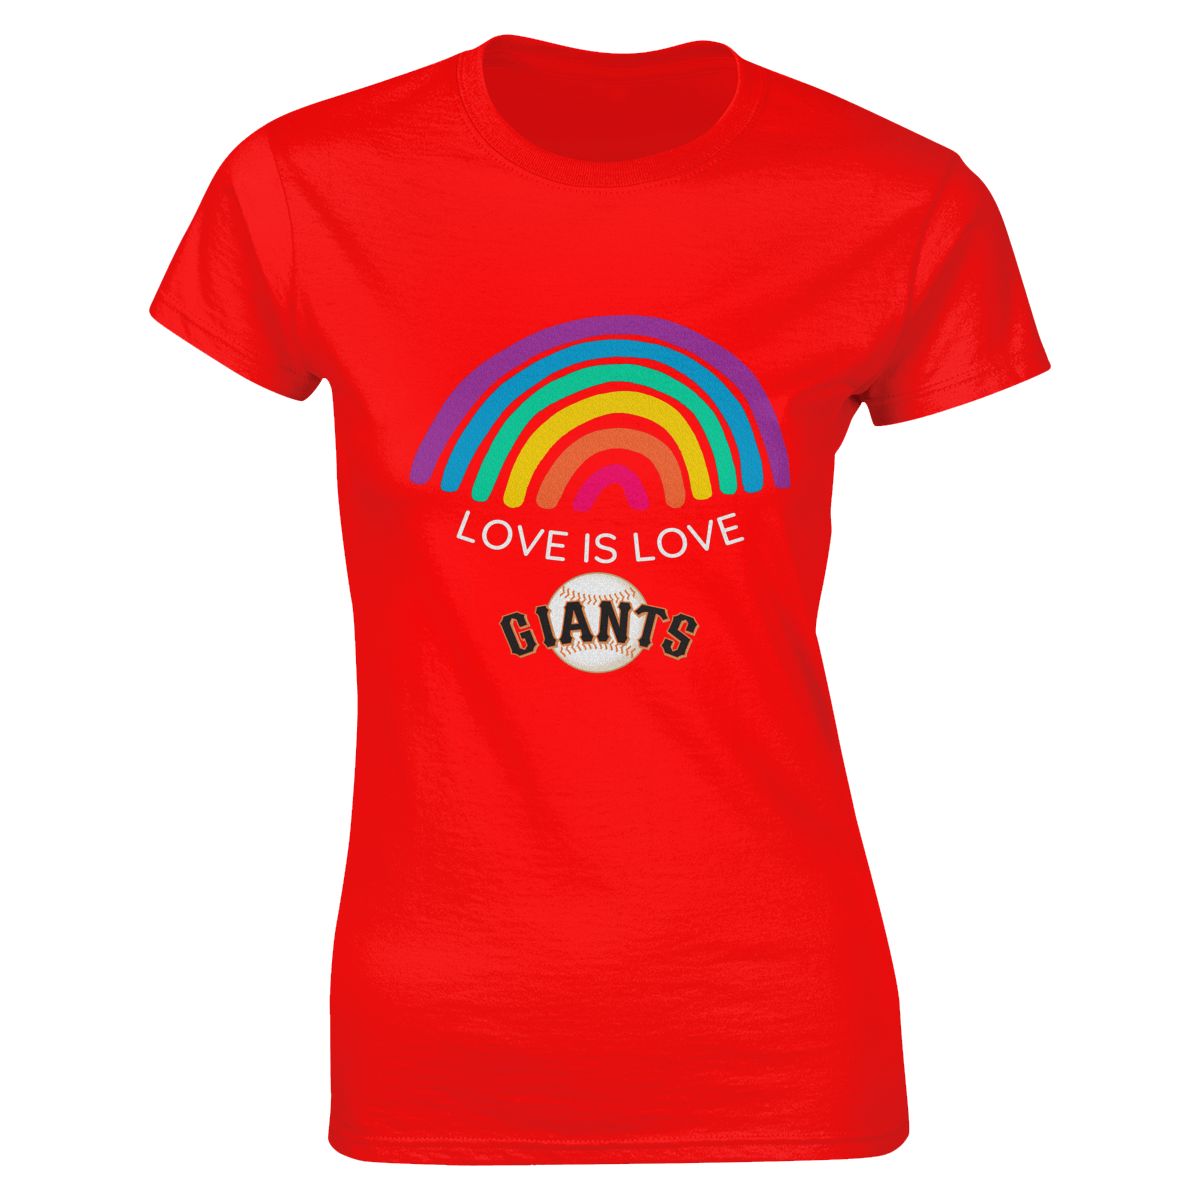 San Francisco Giants Love is Love Pride Rainbow Women's Soft Cotton T-Shirt